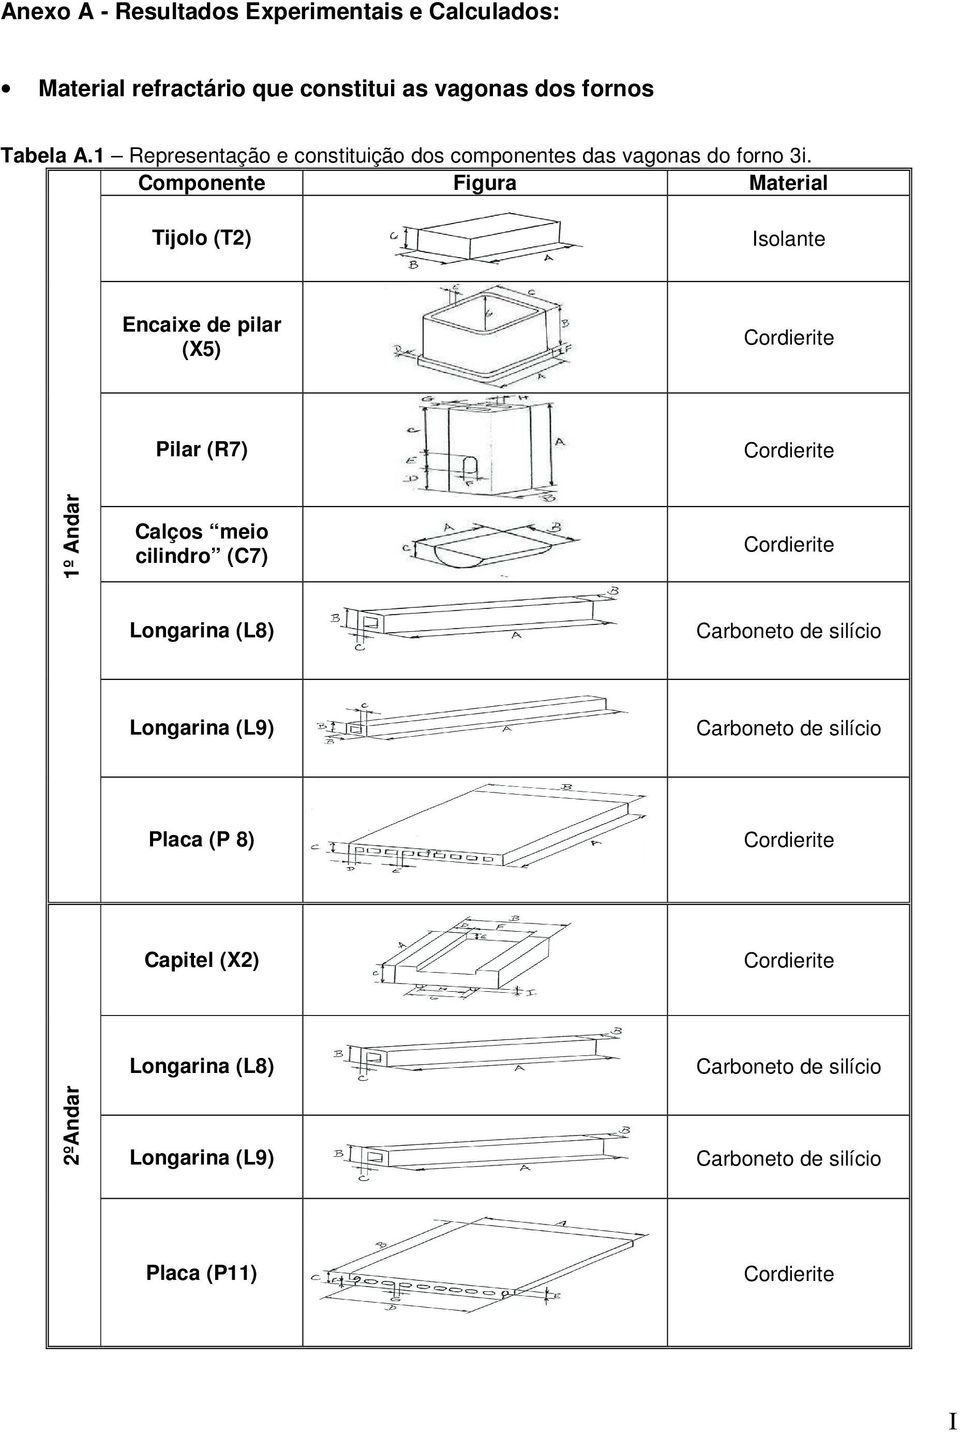 Coponente Figura Material Tijolo (T2) Isolante Encaixe de pilar (X5) Cordierite Pilar (R7) Cordierite 1º Andar Calços eio cilindro (C7)